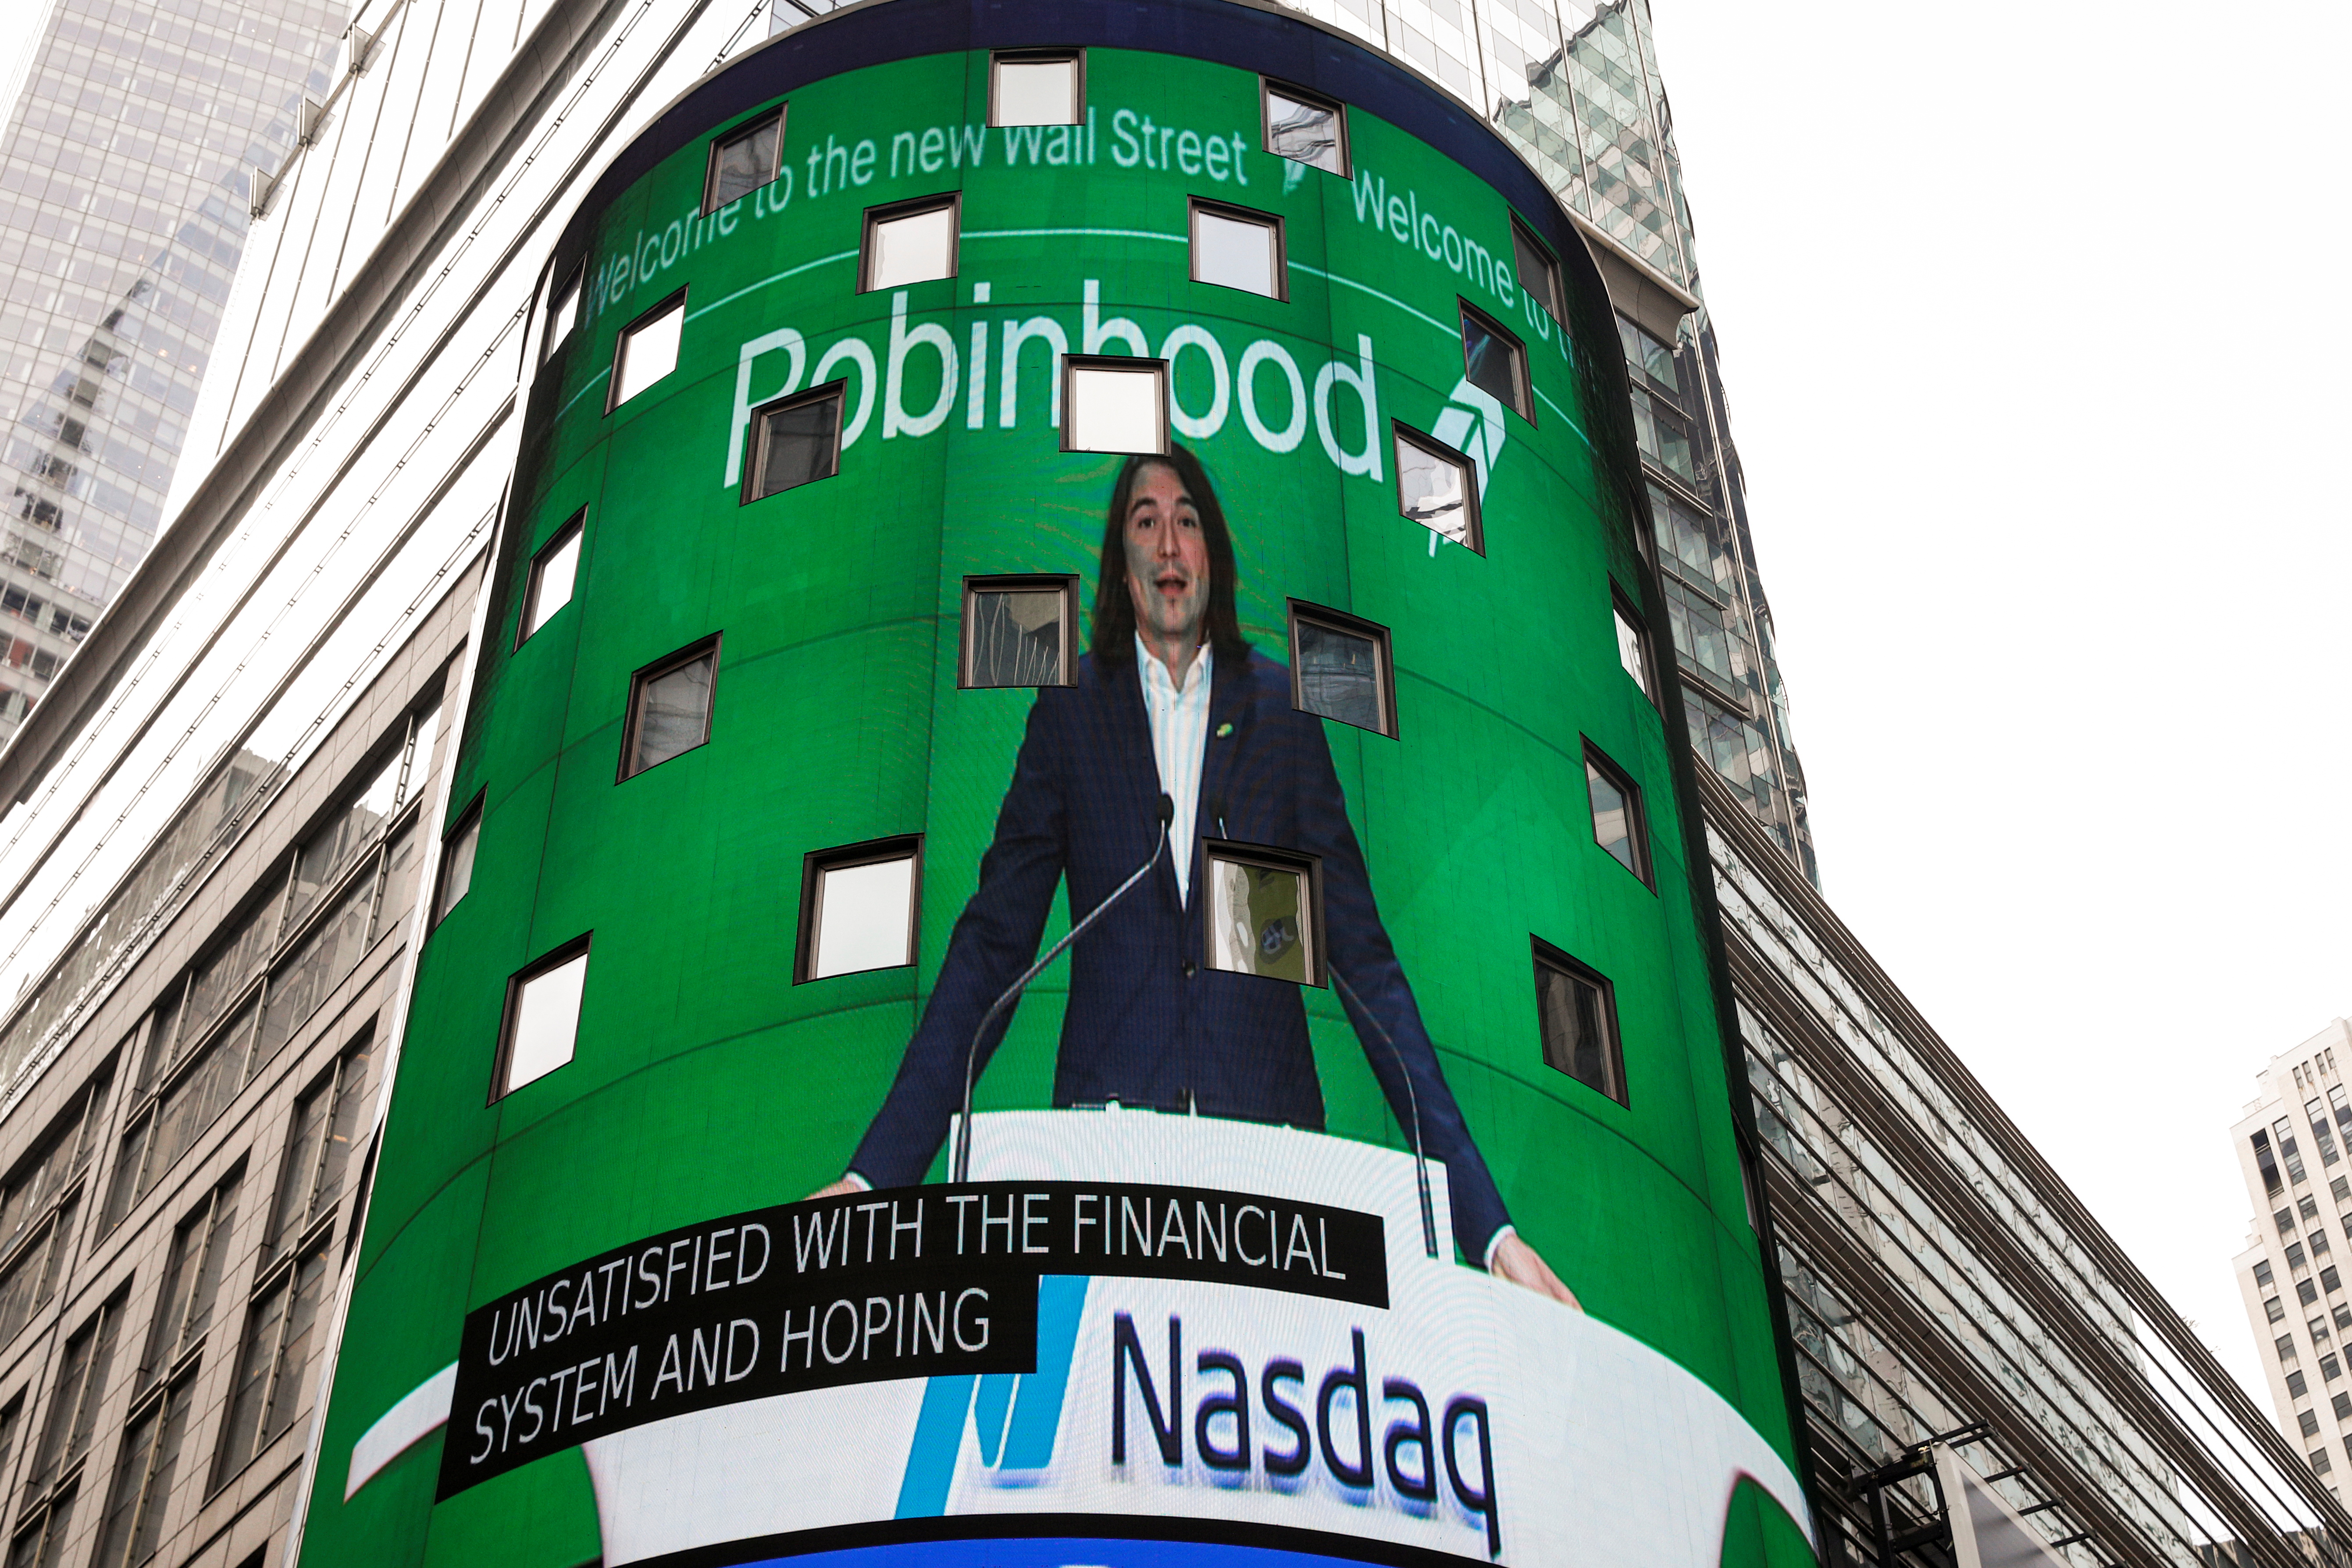 Robinhood Markets Inc's IPO on the Nasdaq